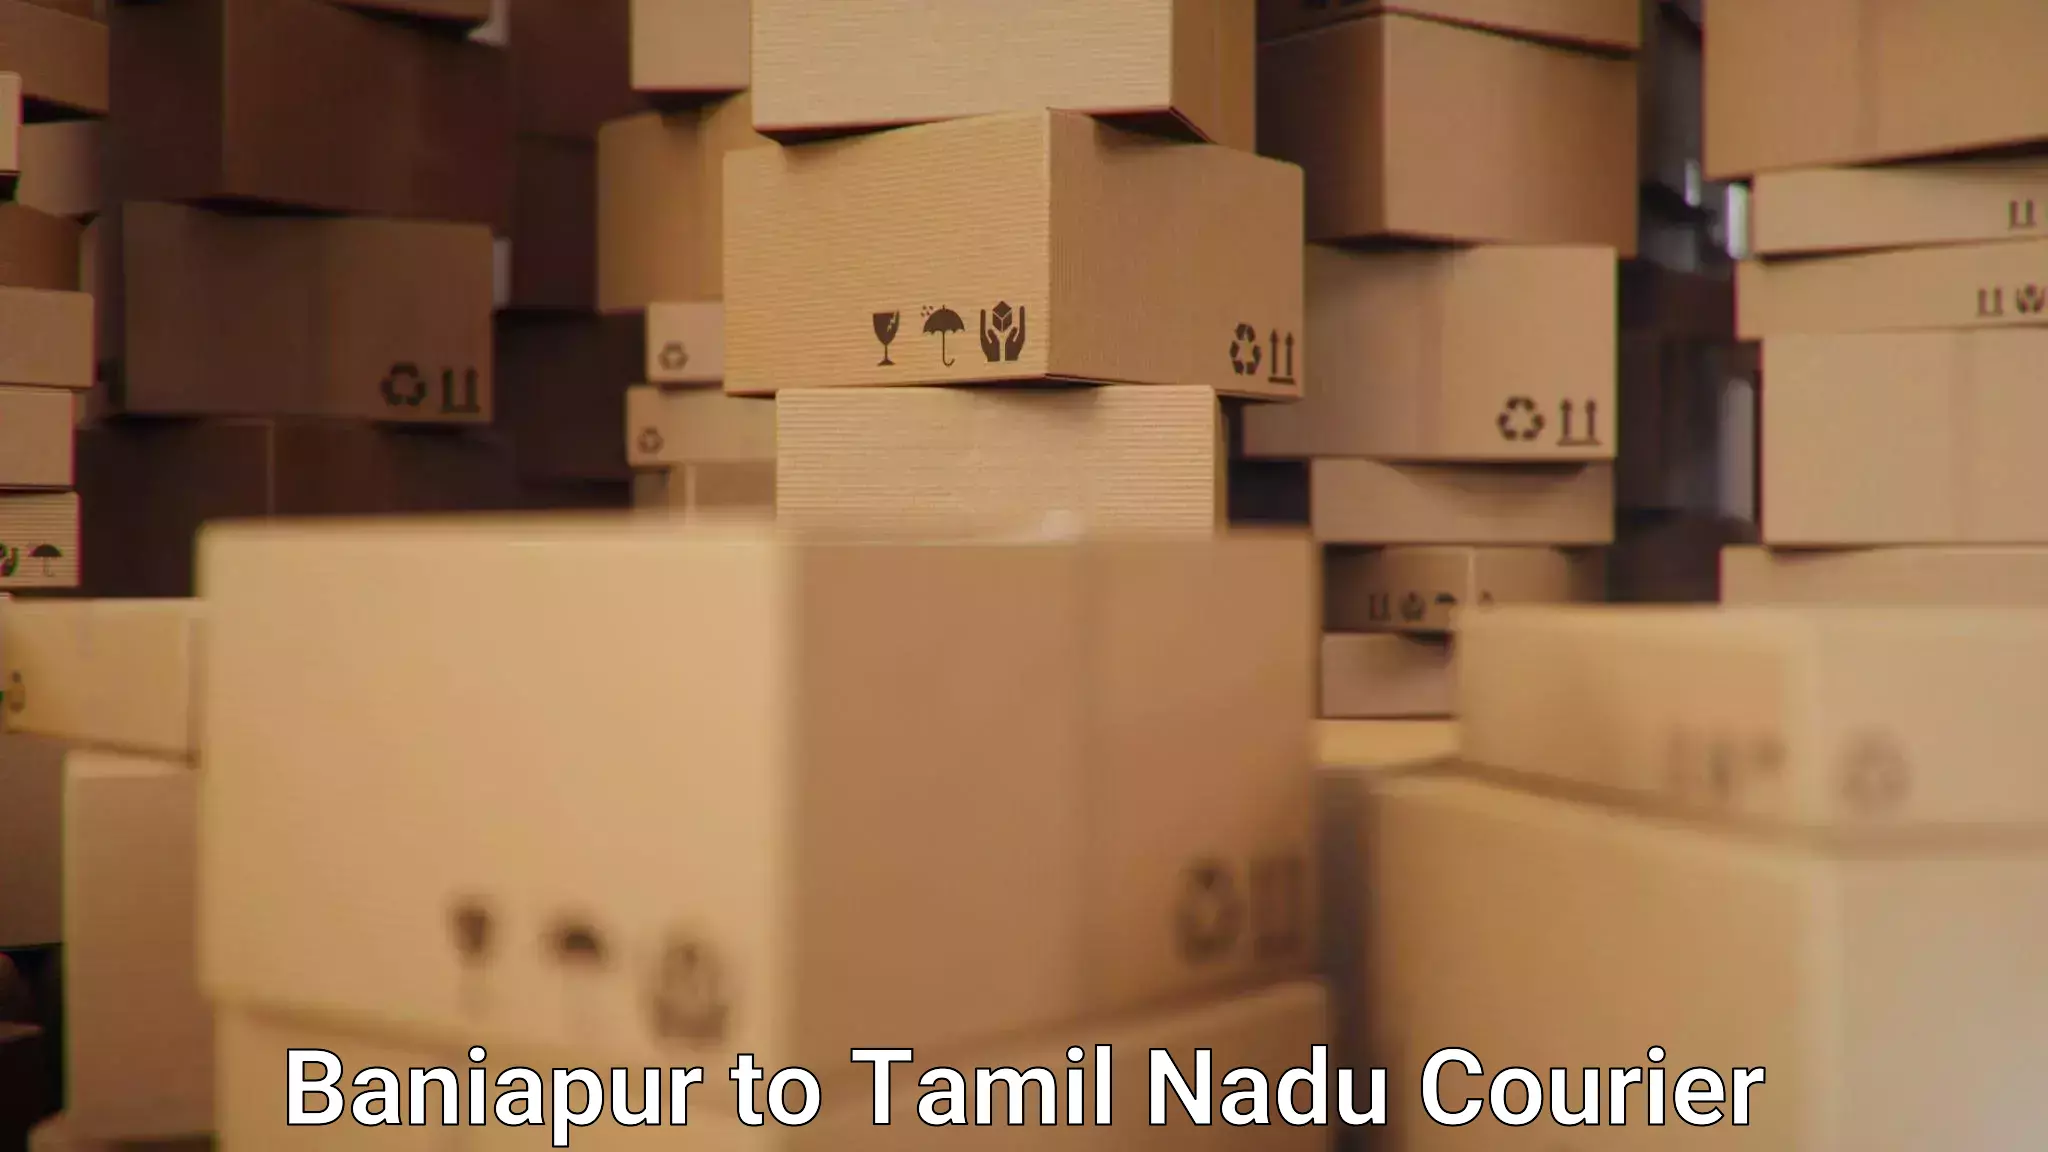 Fast shipping solutions Baniapur to Sriperumbudur